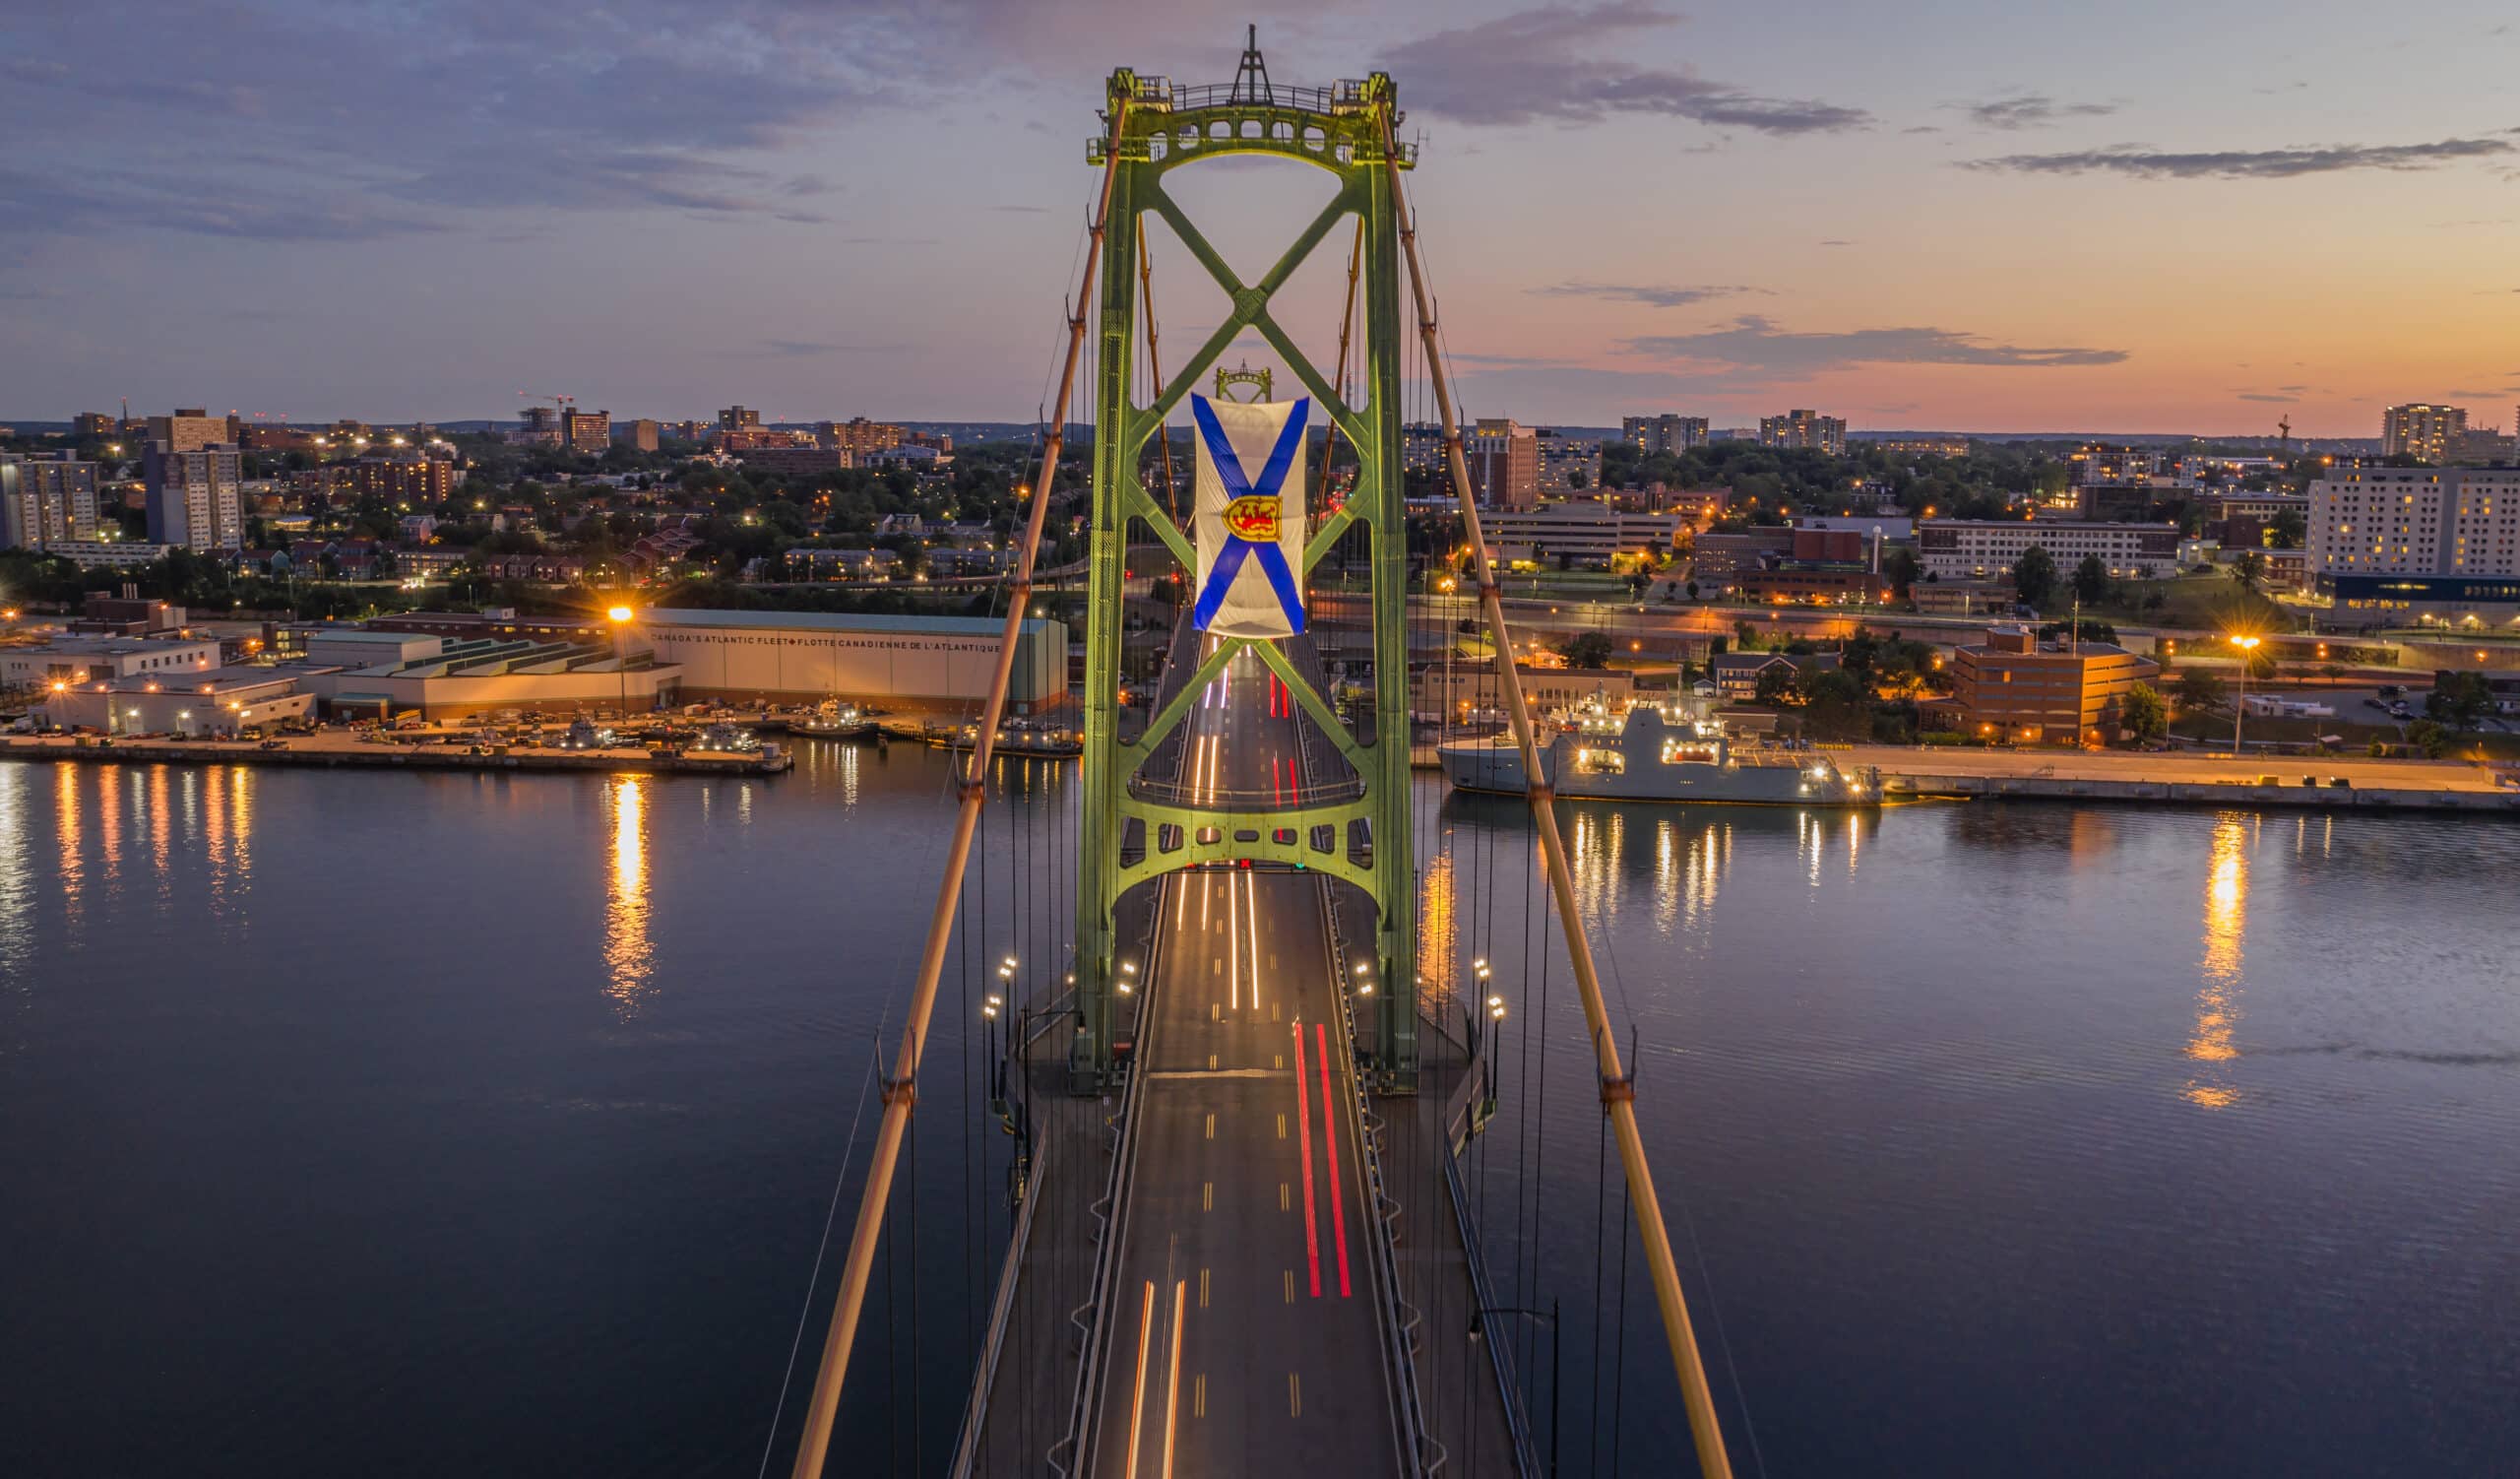 A photo of the Macdonald Bridge Dartmouth tower with the Nova Scotia flag flying.